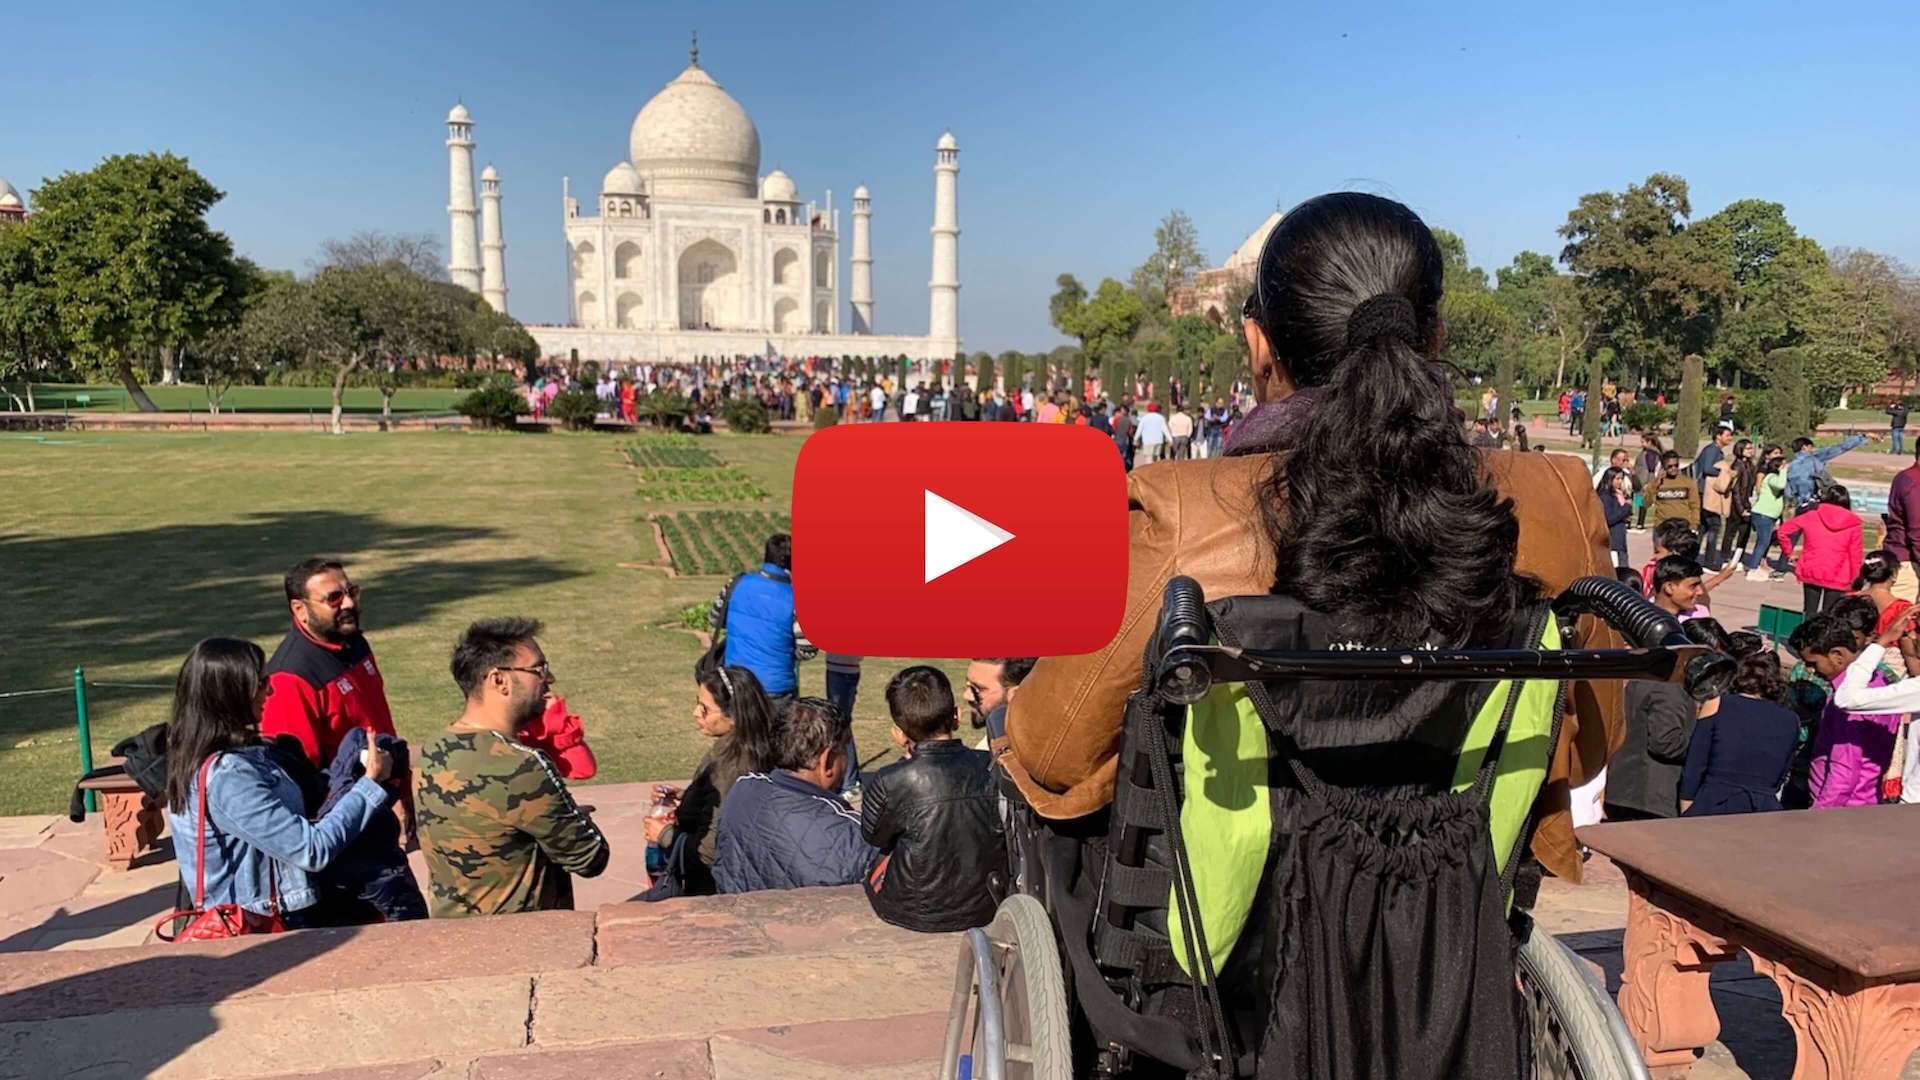 Facing the Taj Mahal in Agra